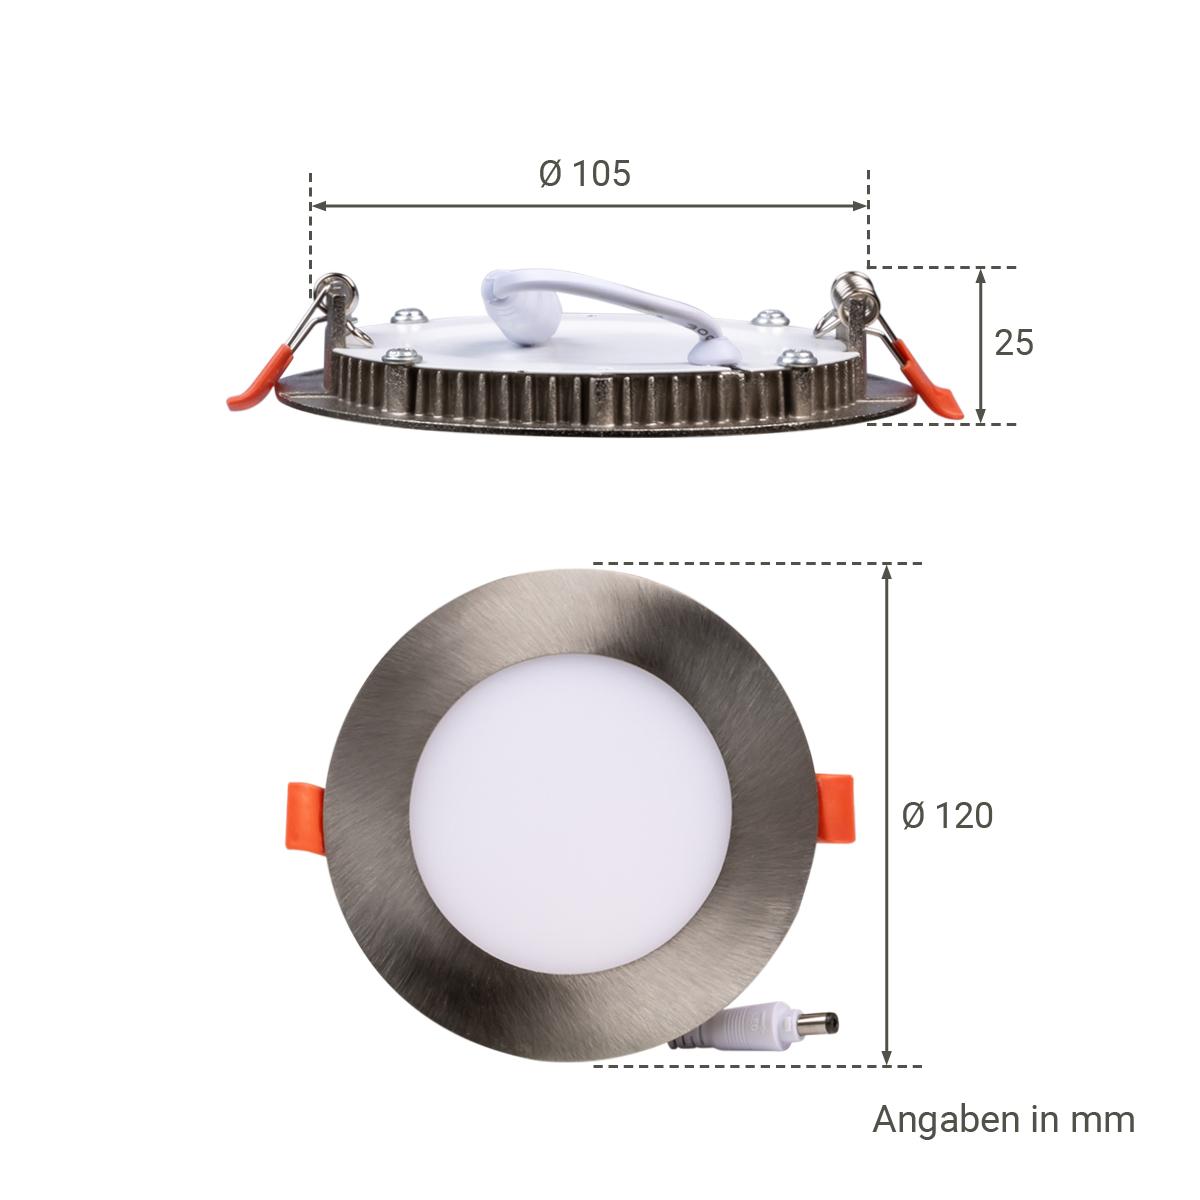 LED Panel Einbaustrahler rund silber - Lichtfarbe: Warmweiß 3000K dimmbar - Ausführung: 6W Ø120mm Ausschnitt Ø105mm